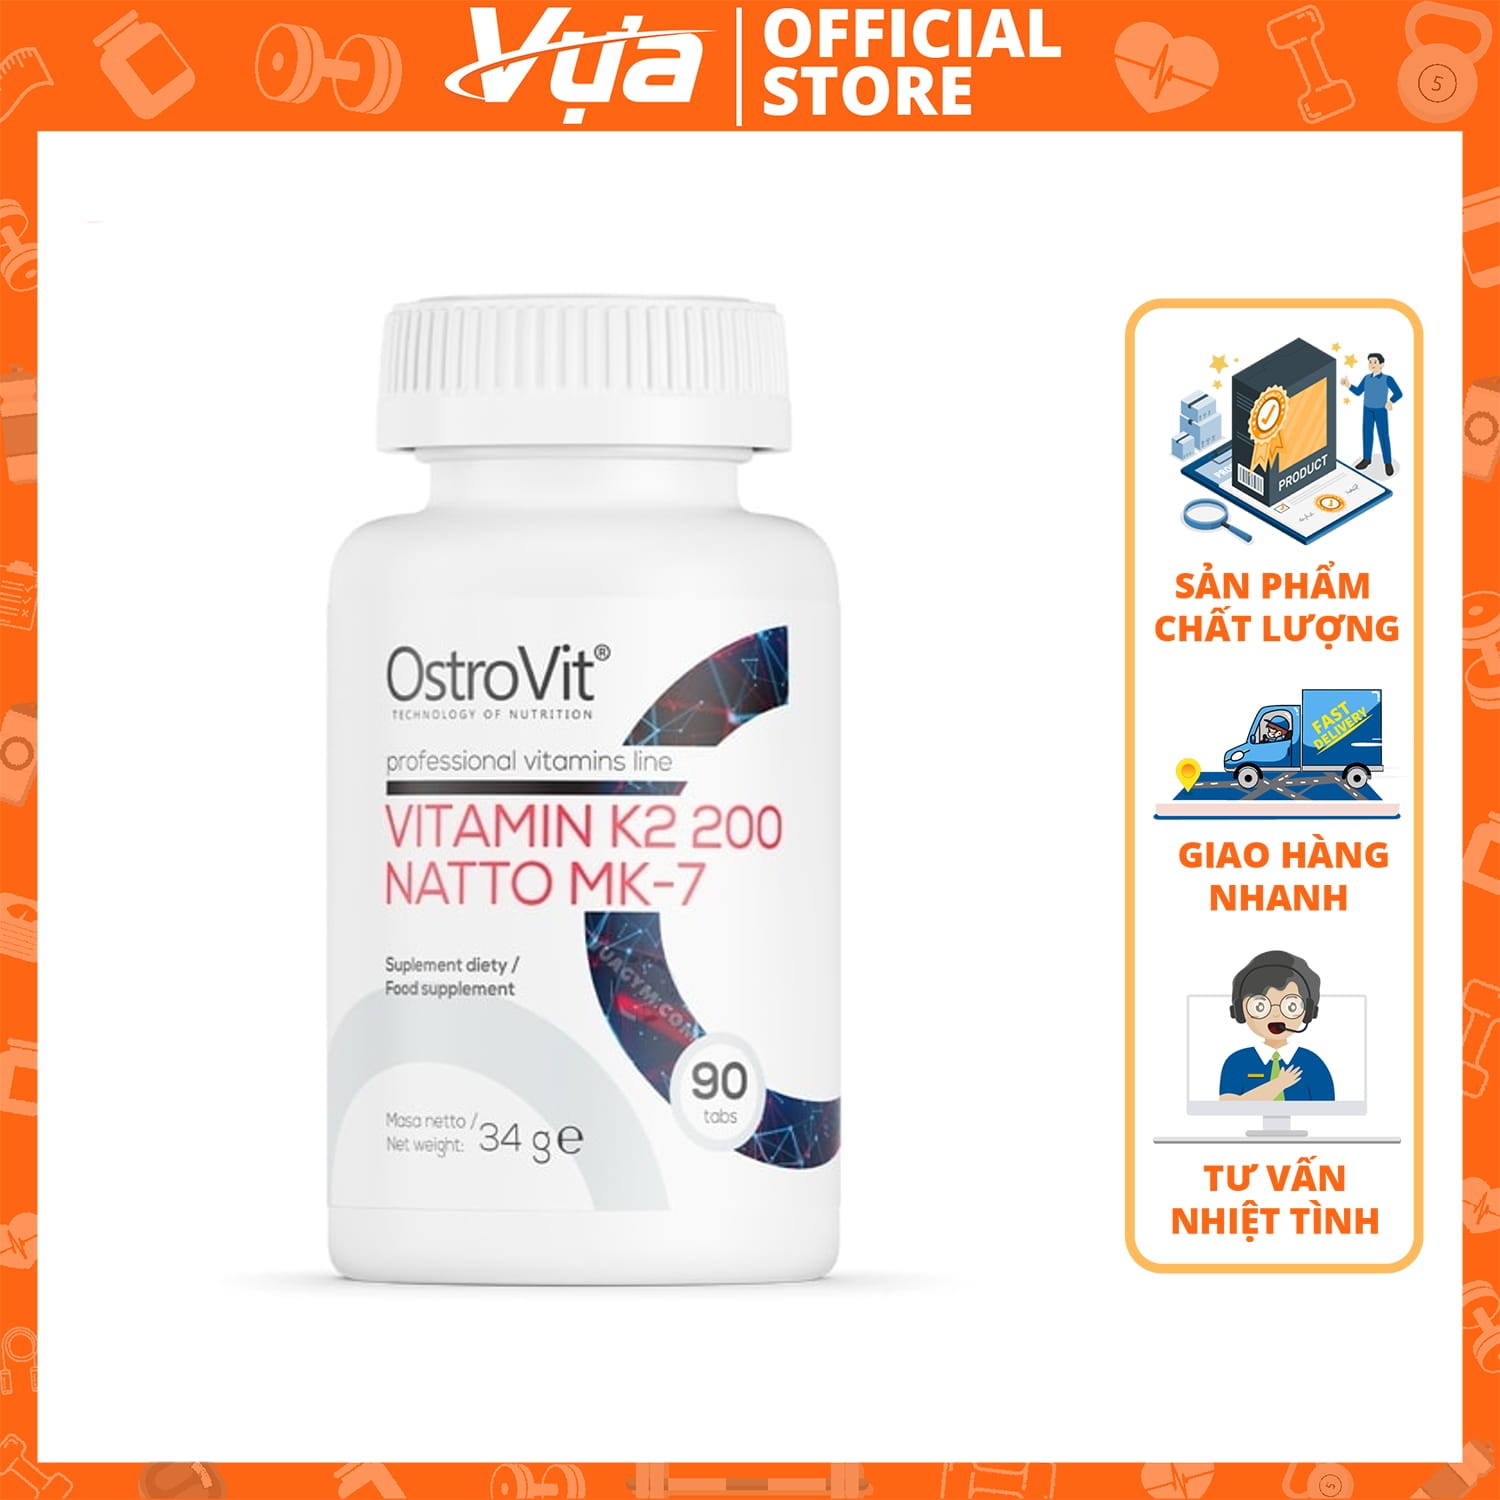 OstroVit - Vitamin K2 200 Natto MK-7 90 viên - Thực Phẩm Bổ Sung Sức Khỏe